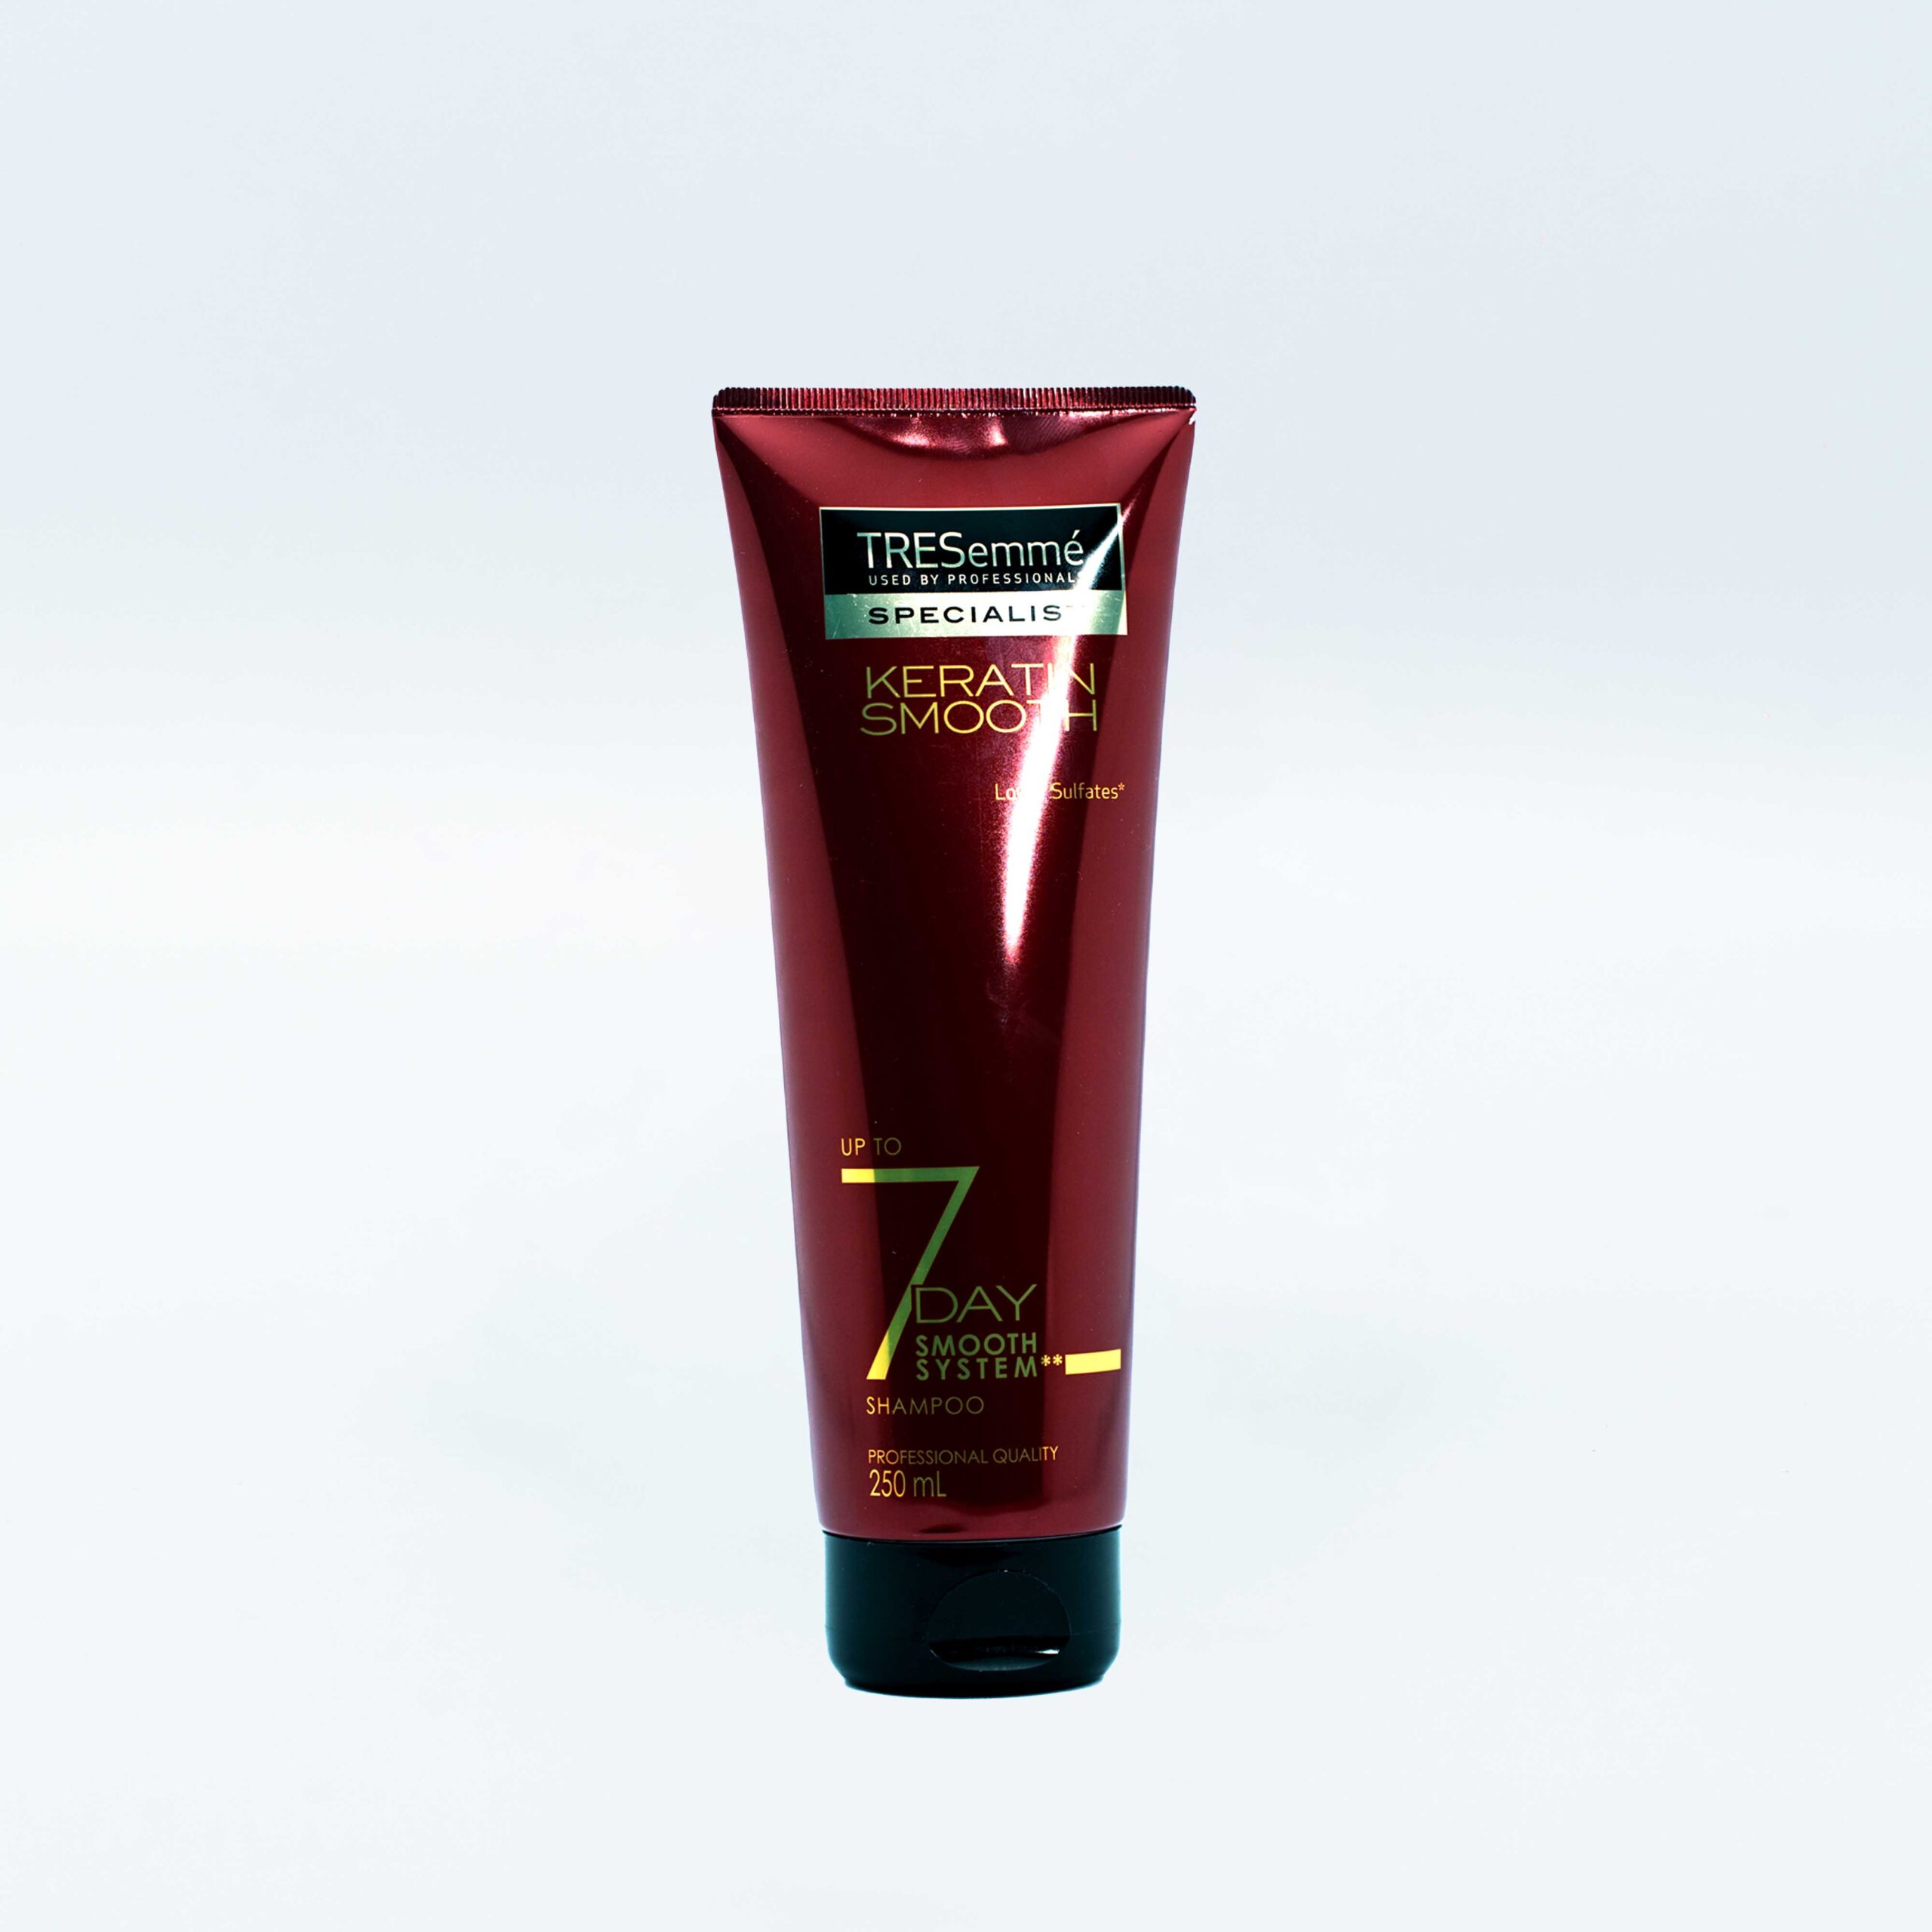 TRESemme' Keratin Smooth System Shampoo -250ml